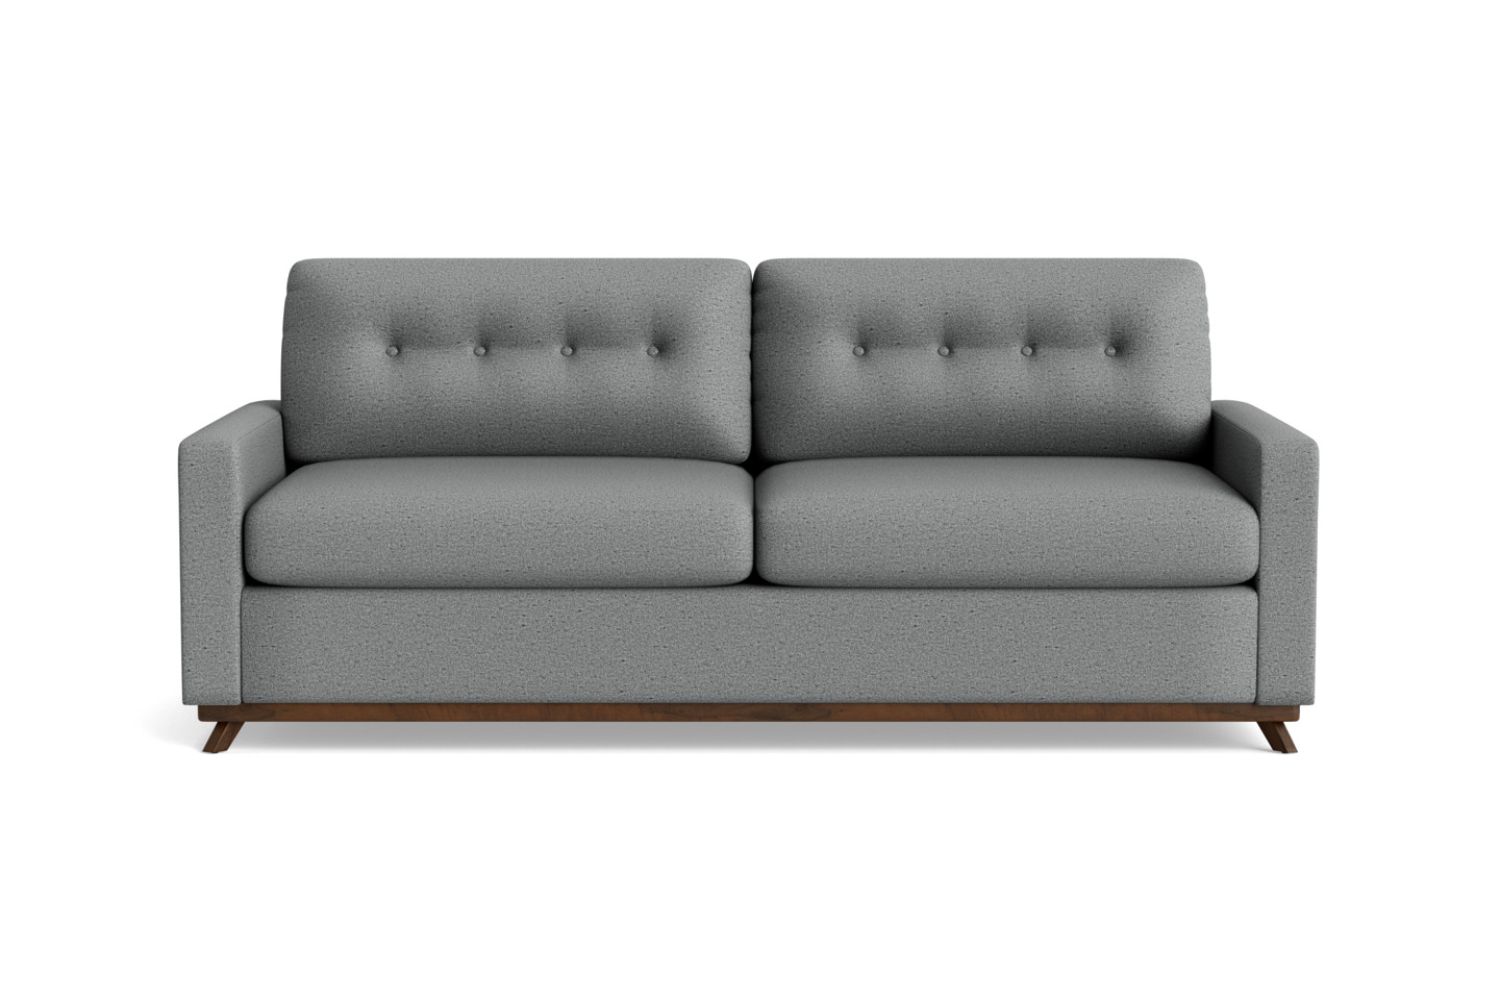 The Best Sofa Brands Option: Joybird